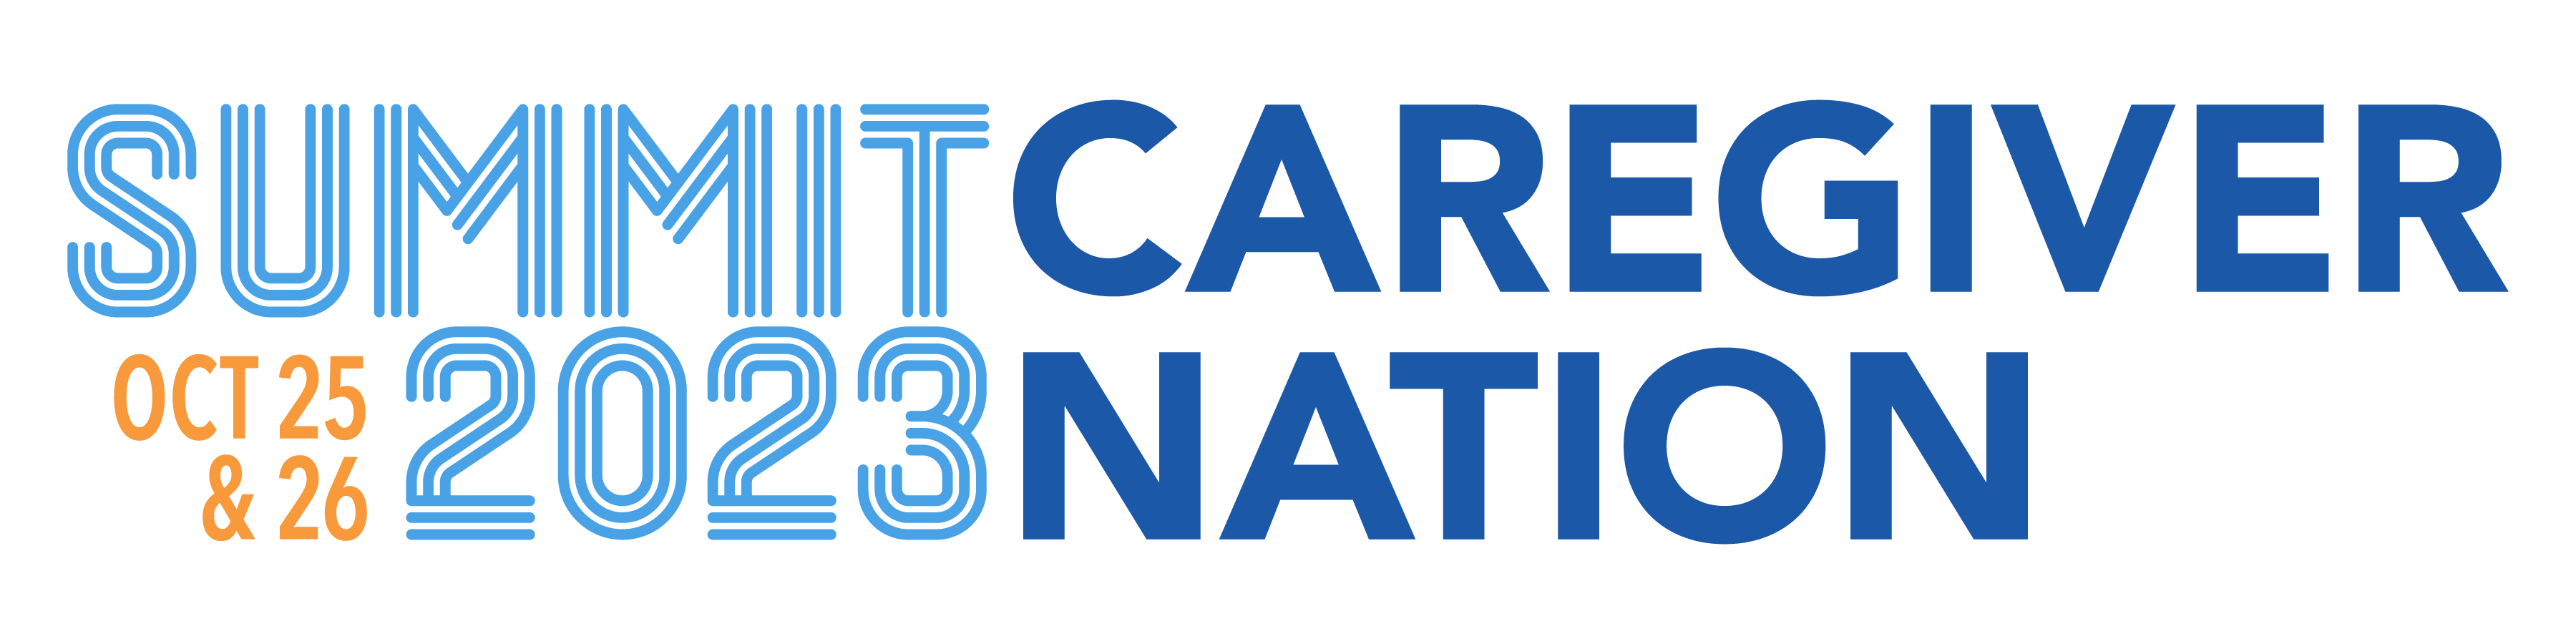 Caregiver Nation Summit